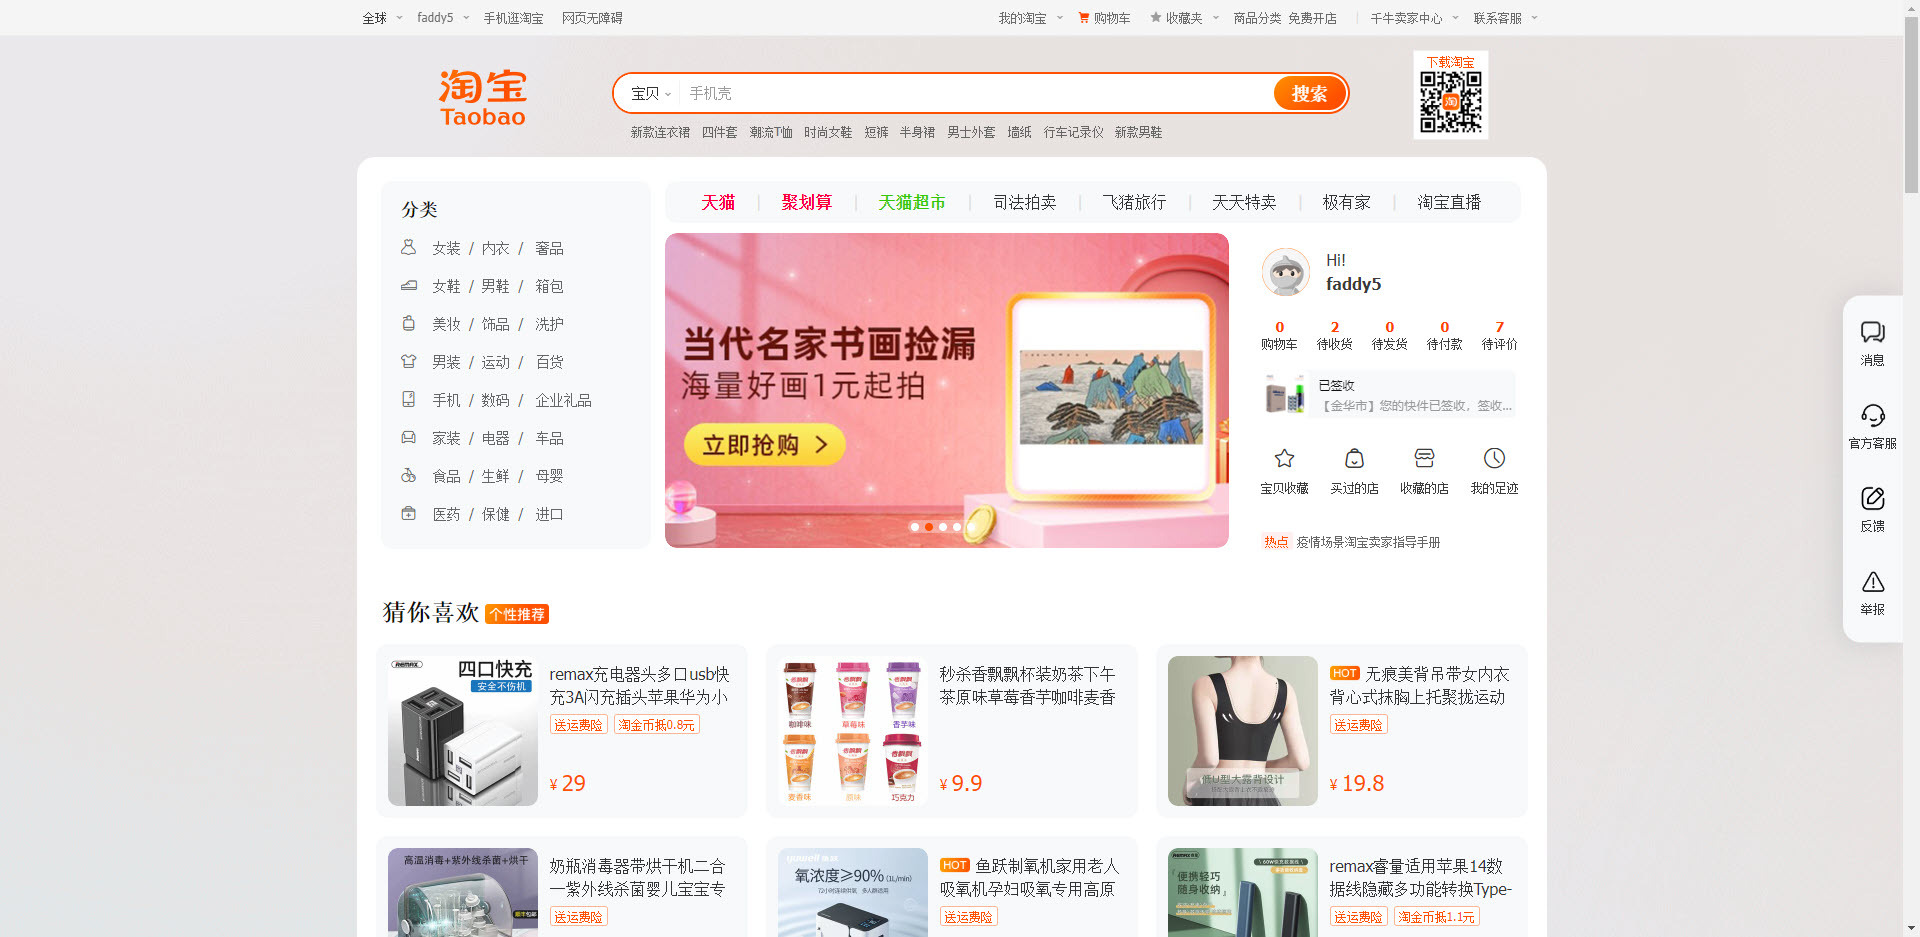 Homepage of Taobao.com